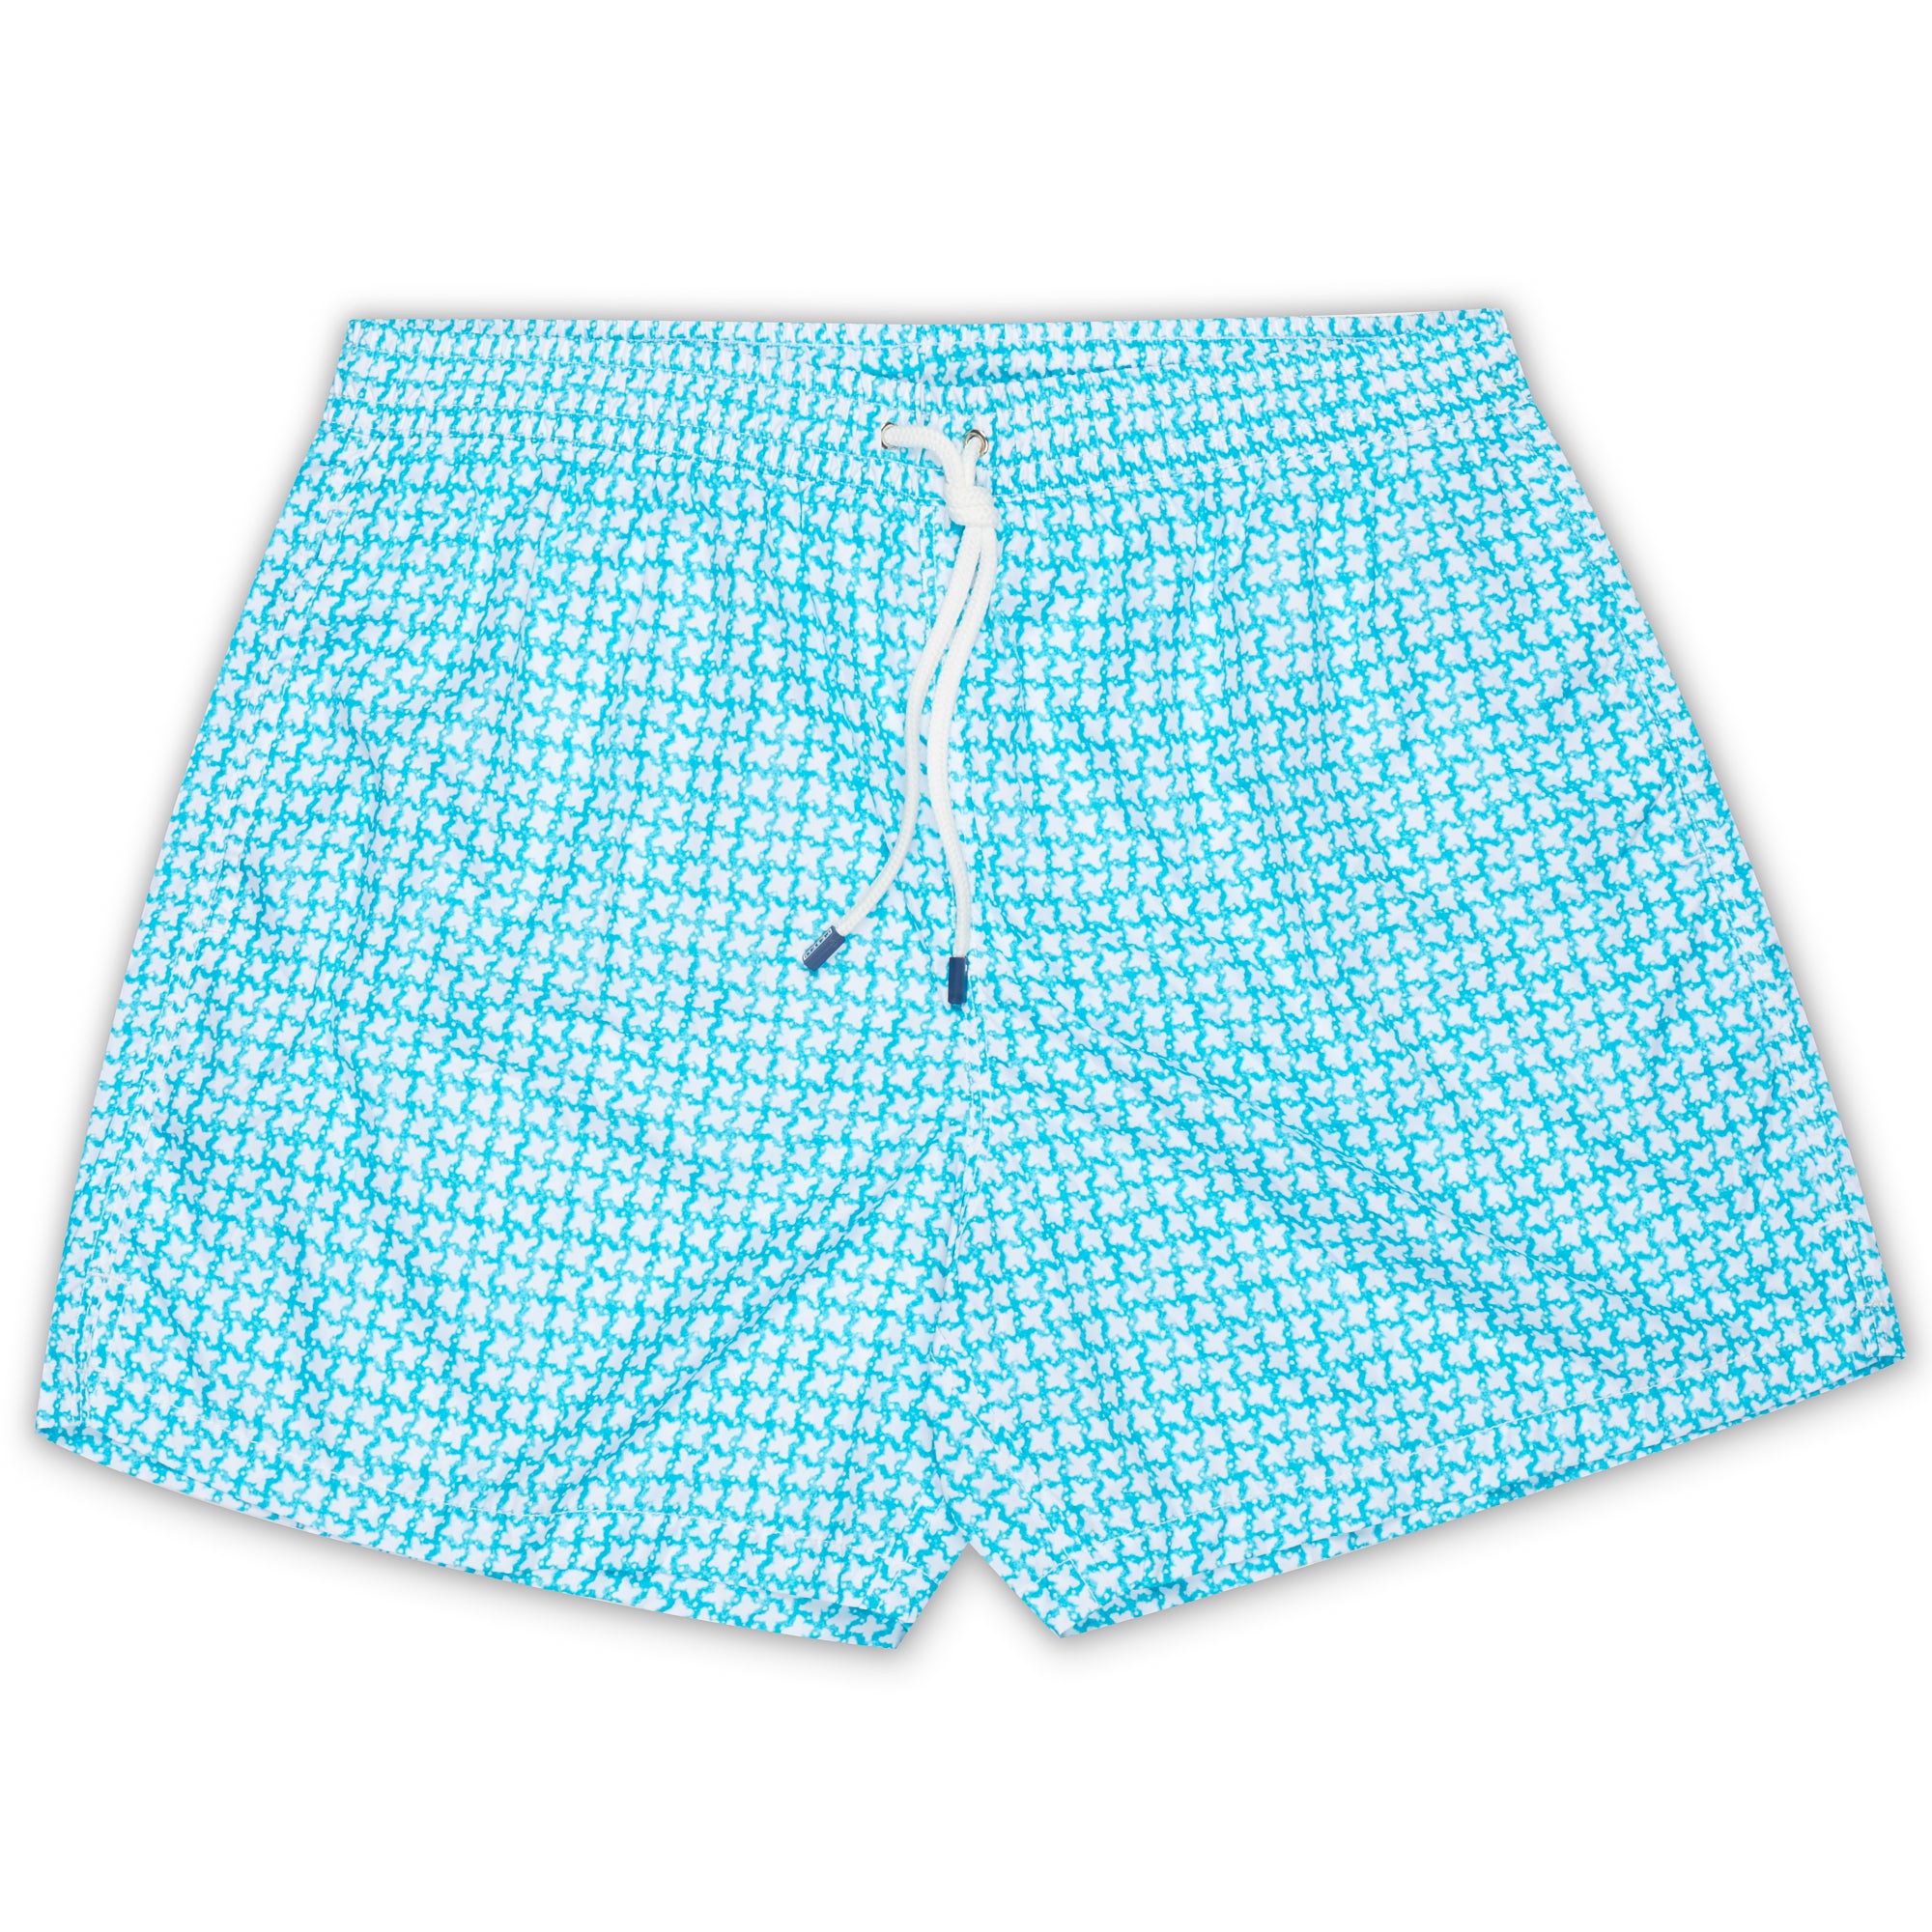 FEDELI Blue-White Geometric Printed Madeira Airstop Swim Shorts Trunks NEW 2XL FEDELI